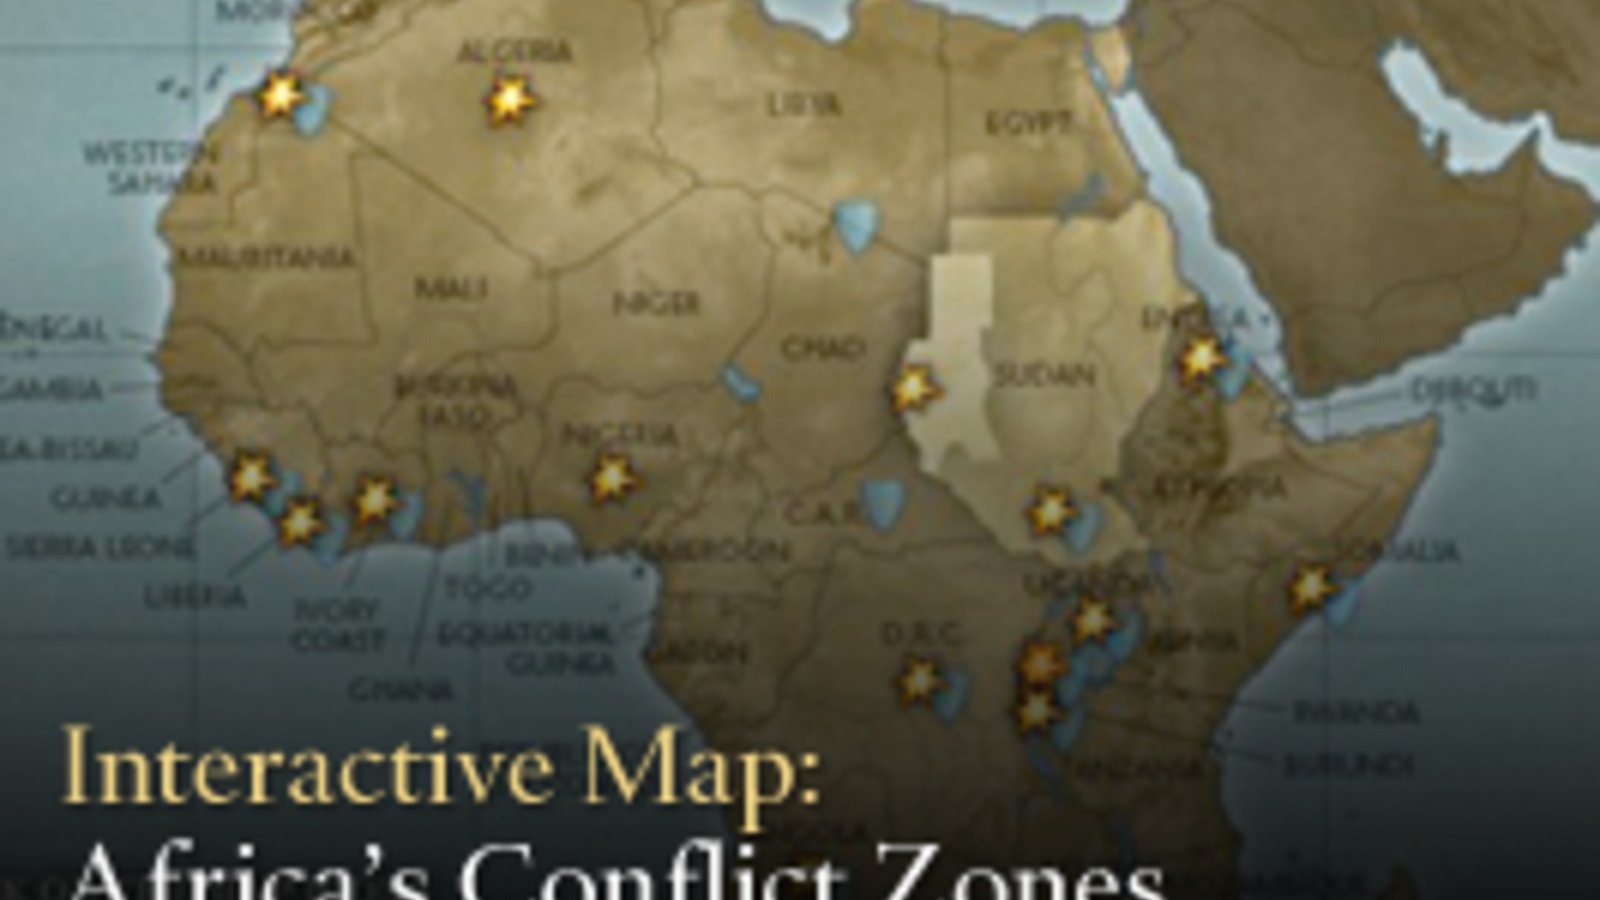 Assassin's Creed Origins Interactive Map